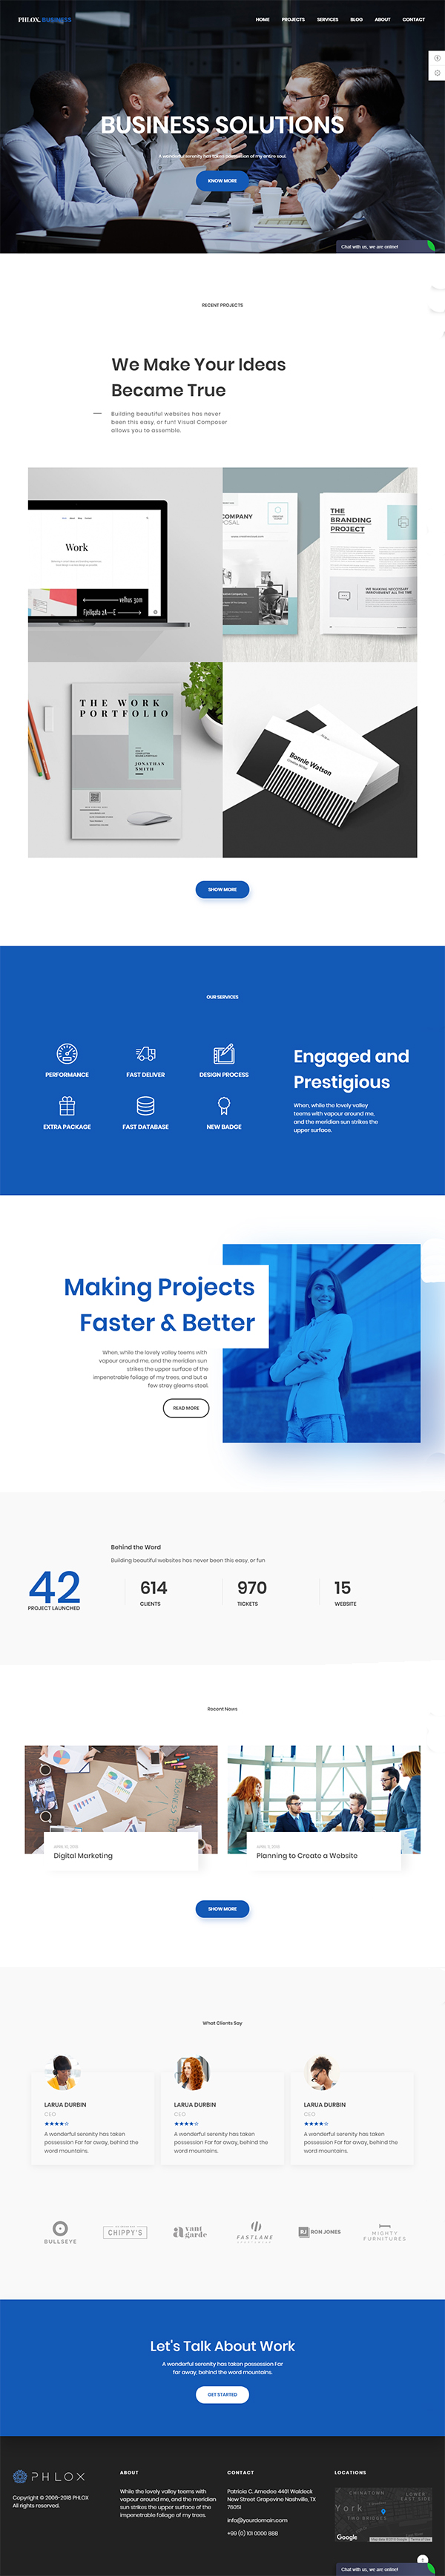 Phlox Pro - Elementor MultiPurpose WordPress Theme